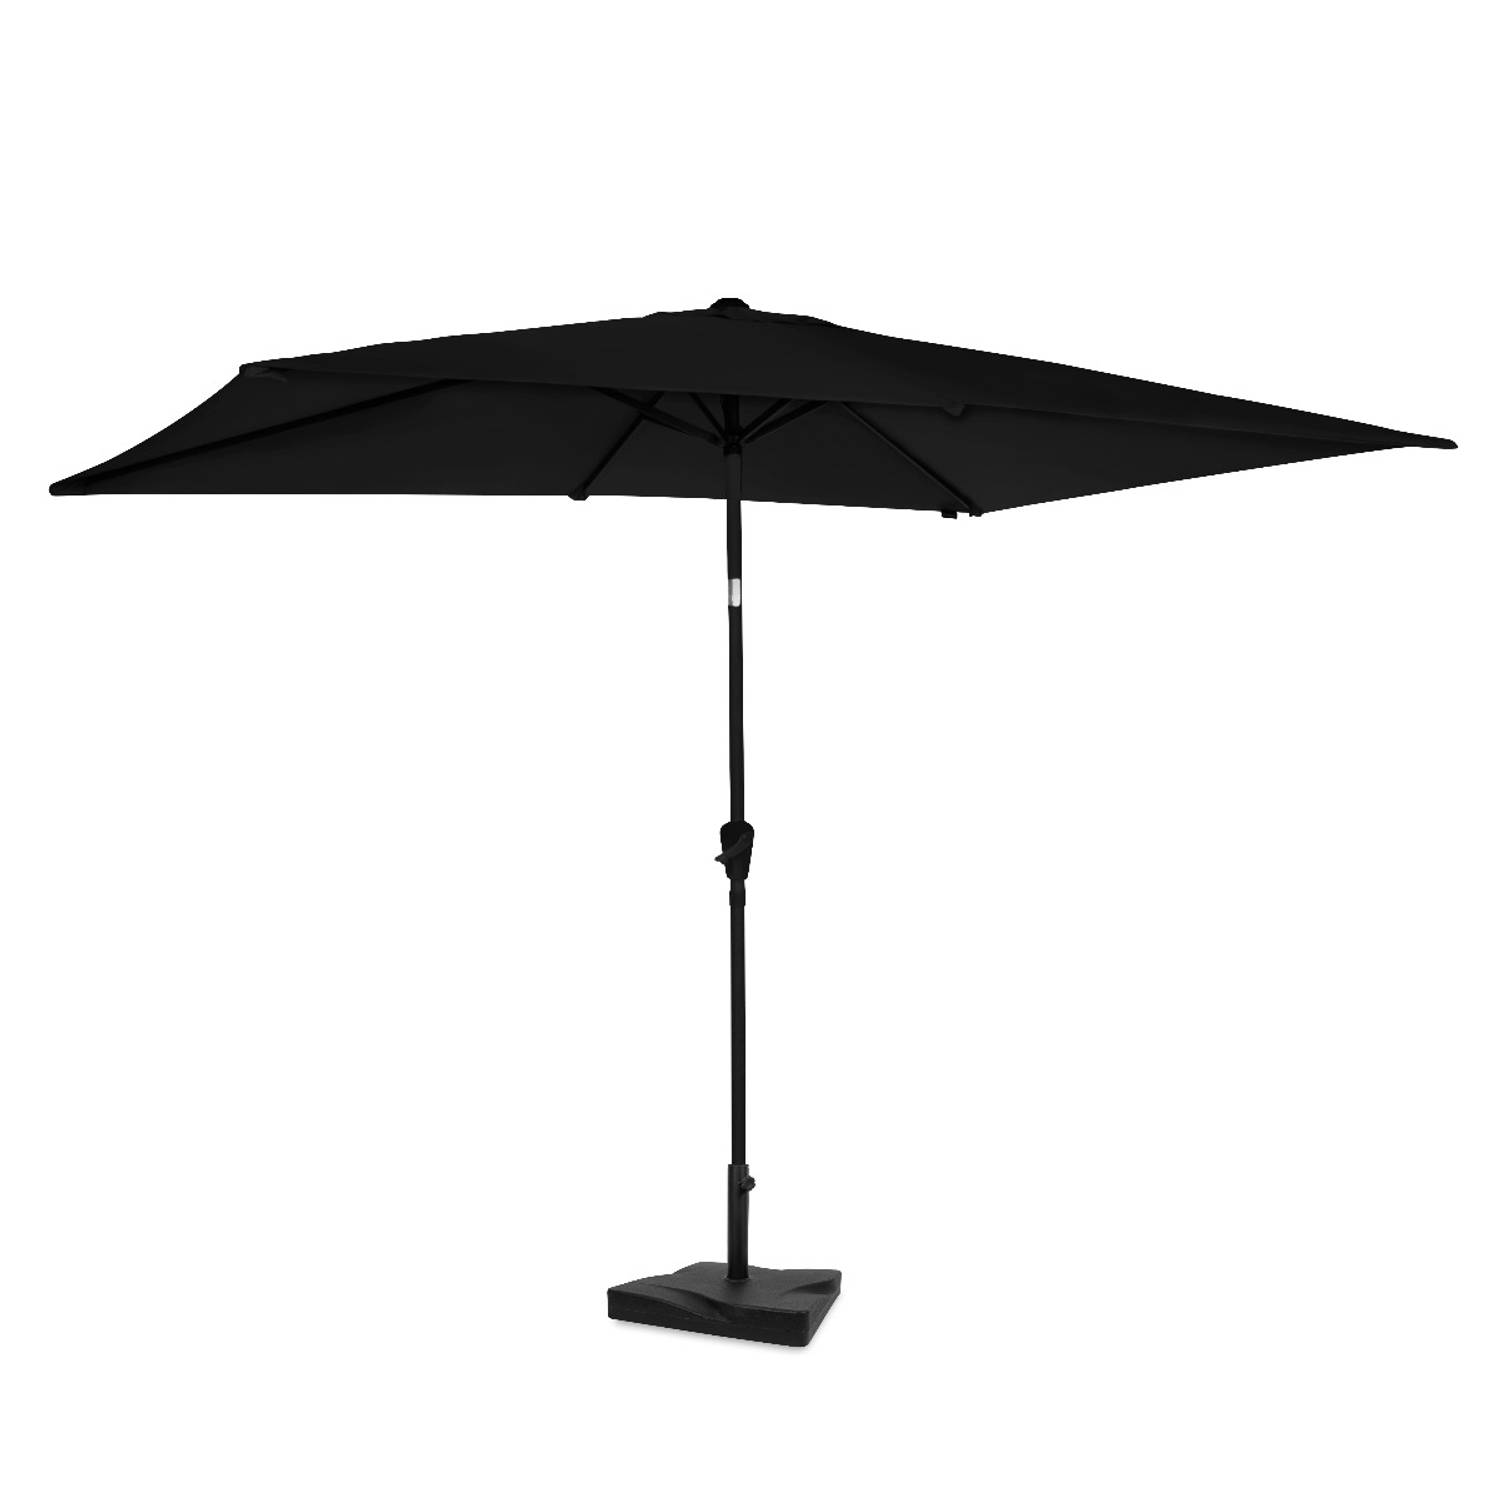 VONROC Premium Parasol Rapallo 200x300cm – Duurzame parasol - combi set incl. parasolvoet van 20 kg - Kantelbaar – UV werend doek - Antraciet/Zwart – Incl. beschermhoes